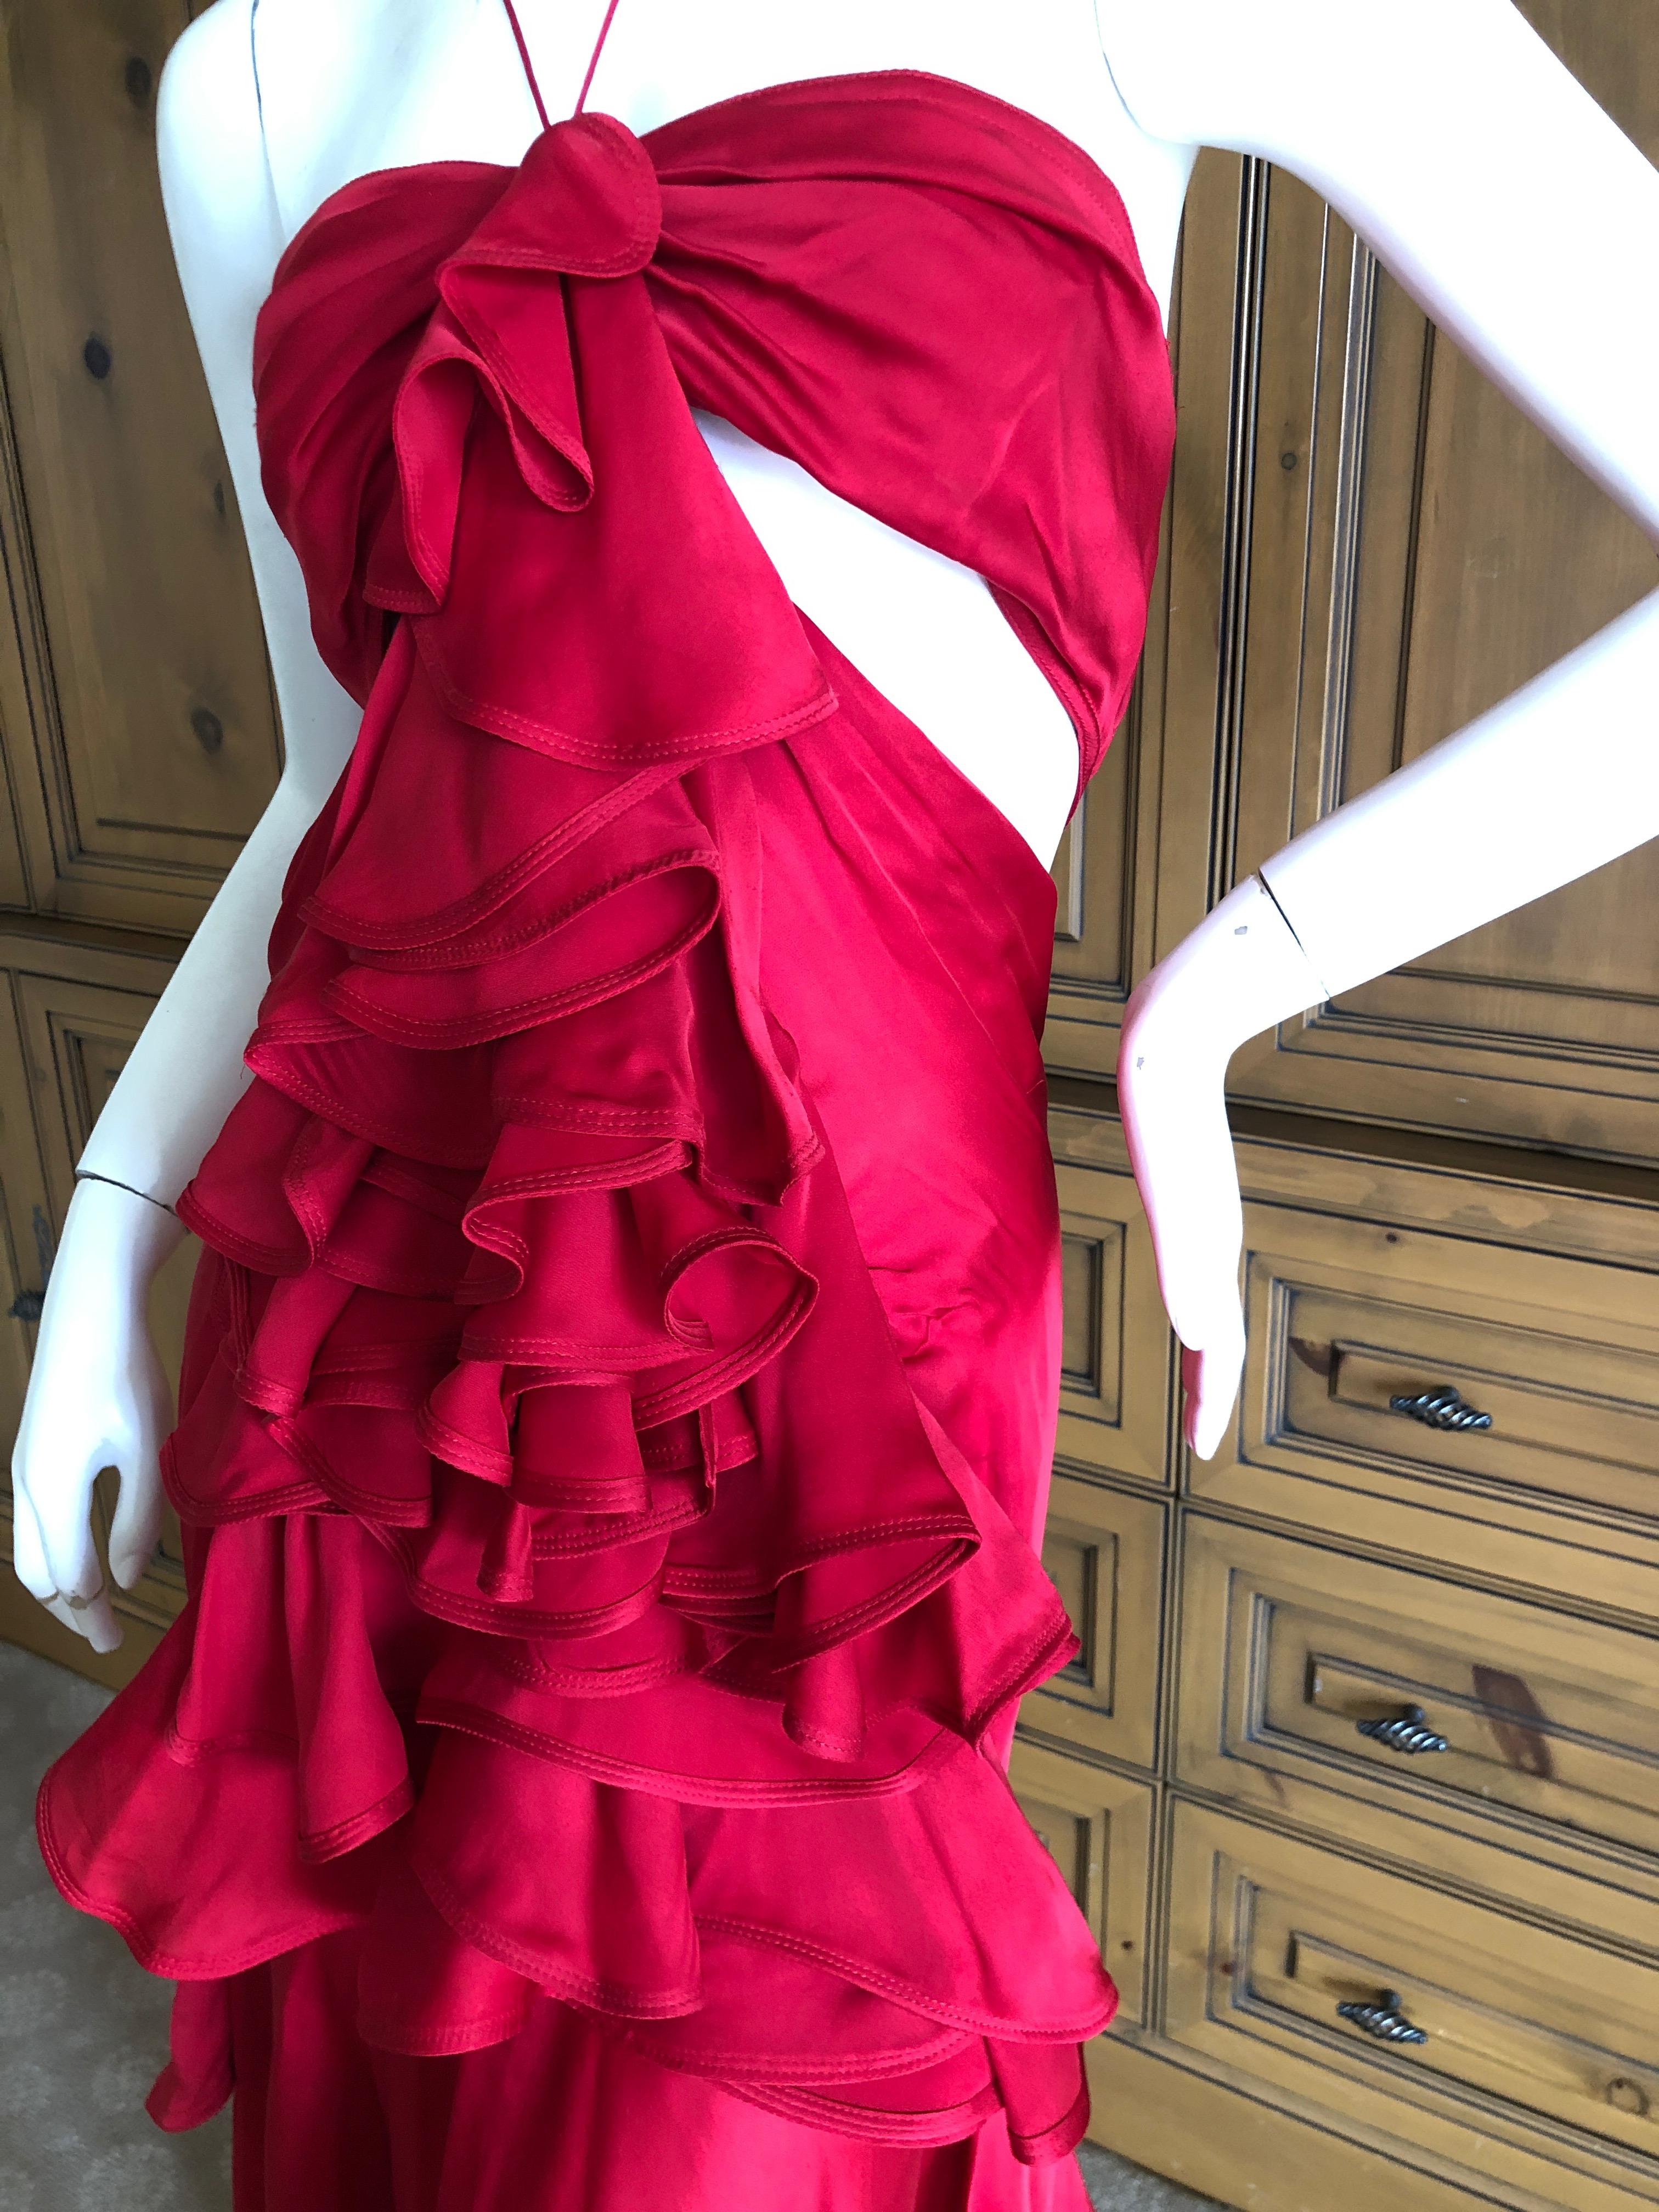 Yves Saint Laurent by Tom Ford 2003 Ruffled Red Silk Dress  4